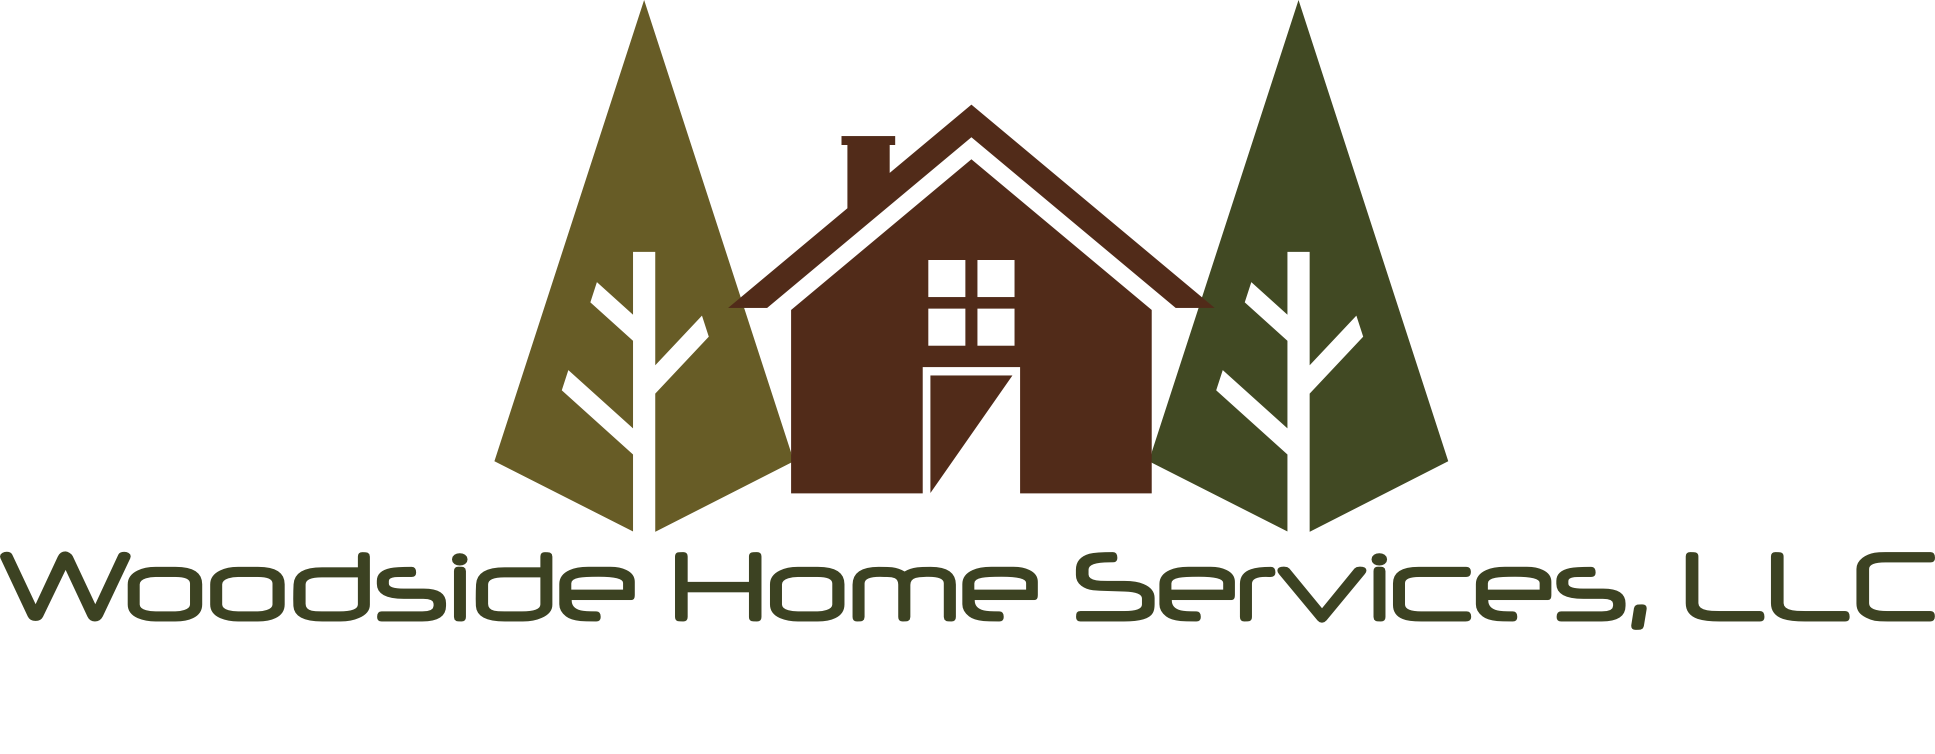 Woodside Home Services, LLC Logo